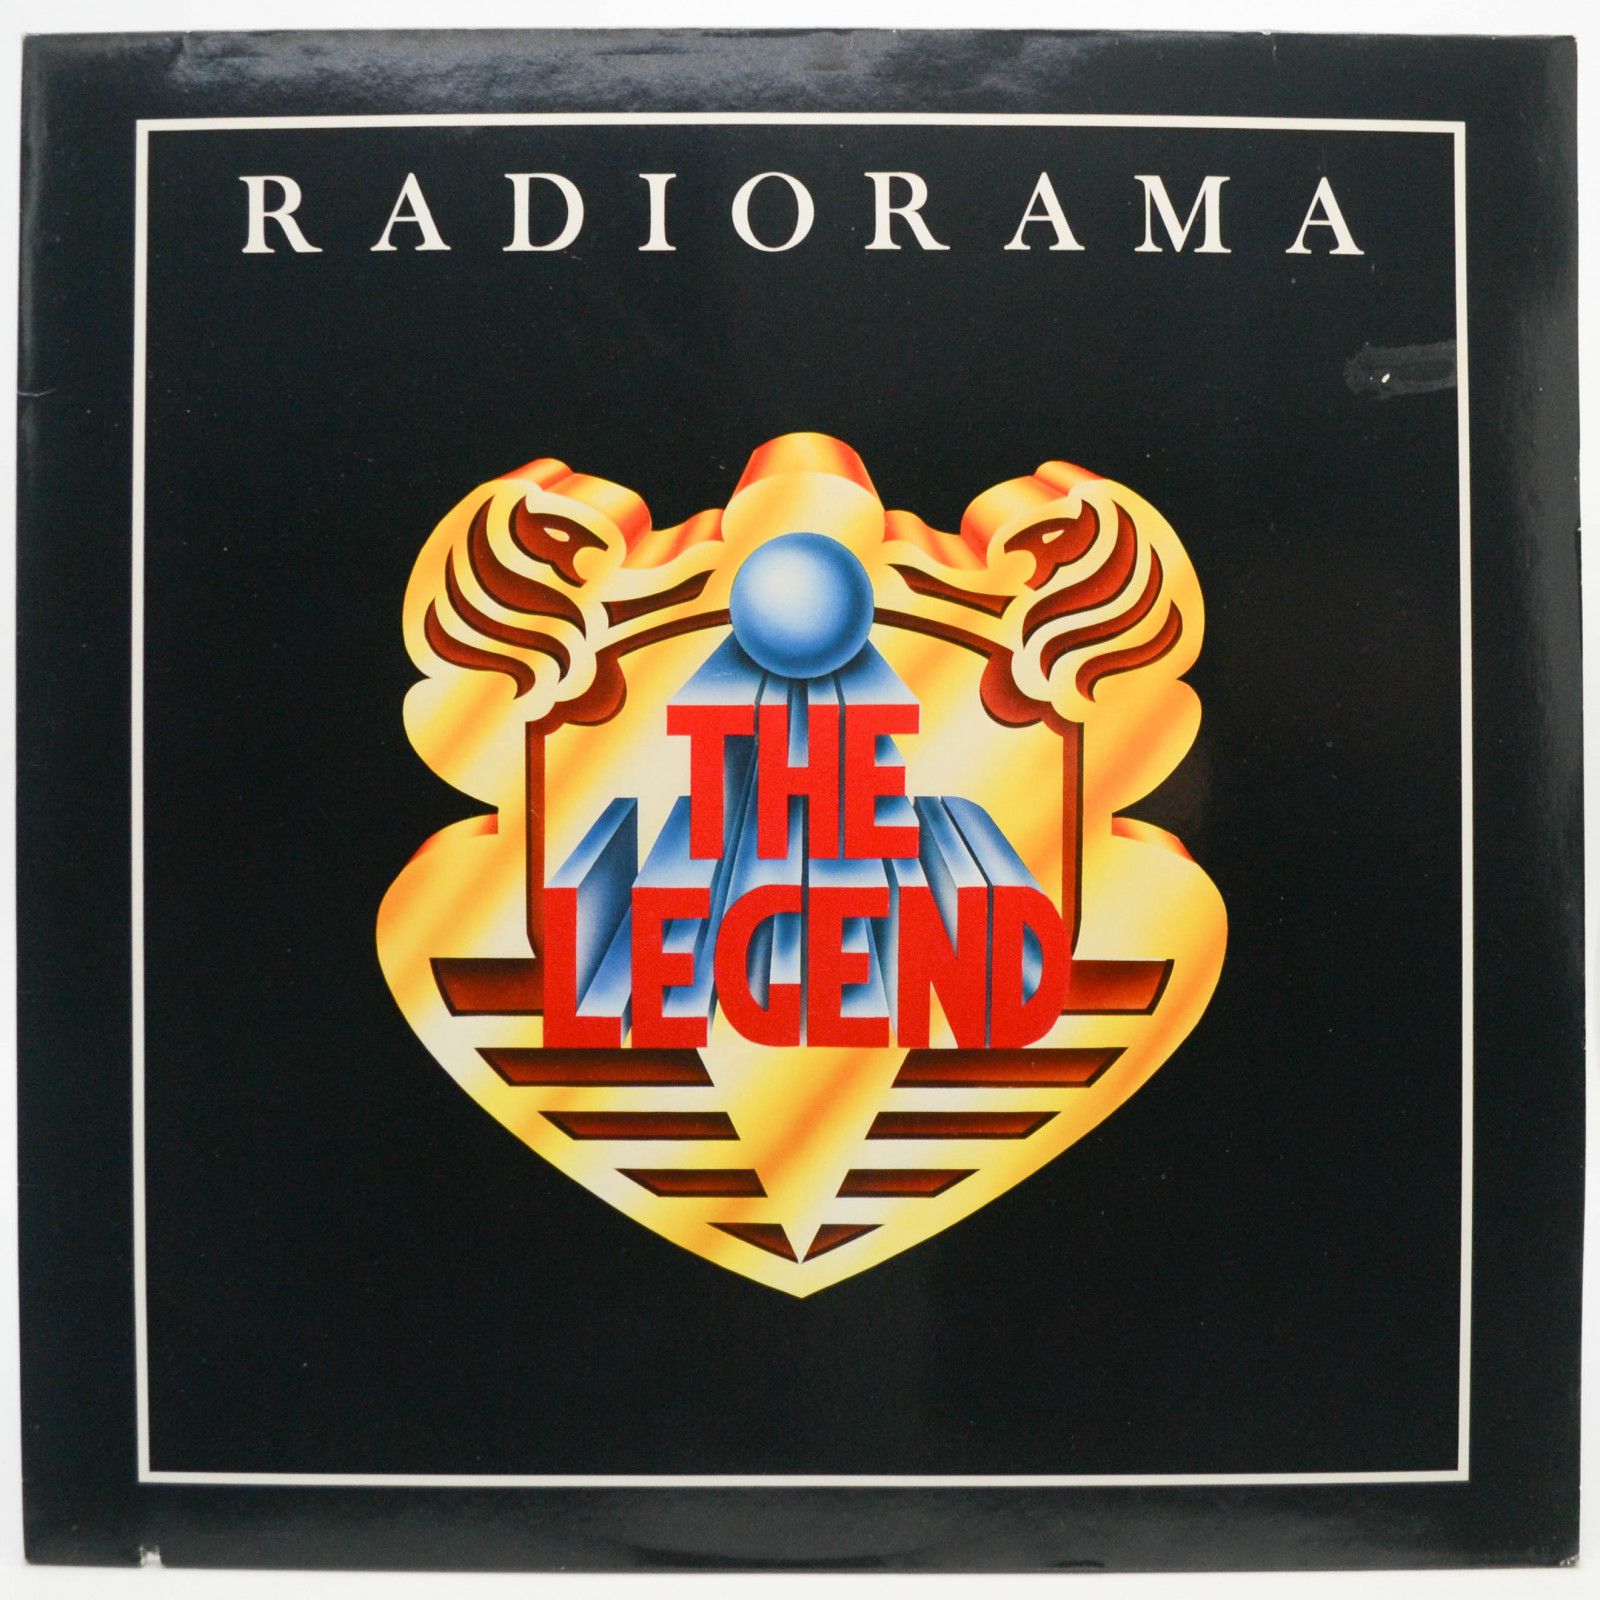 Radiorama — The Legend, 1988